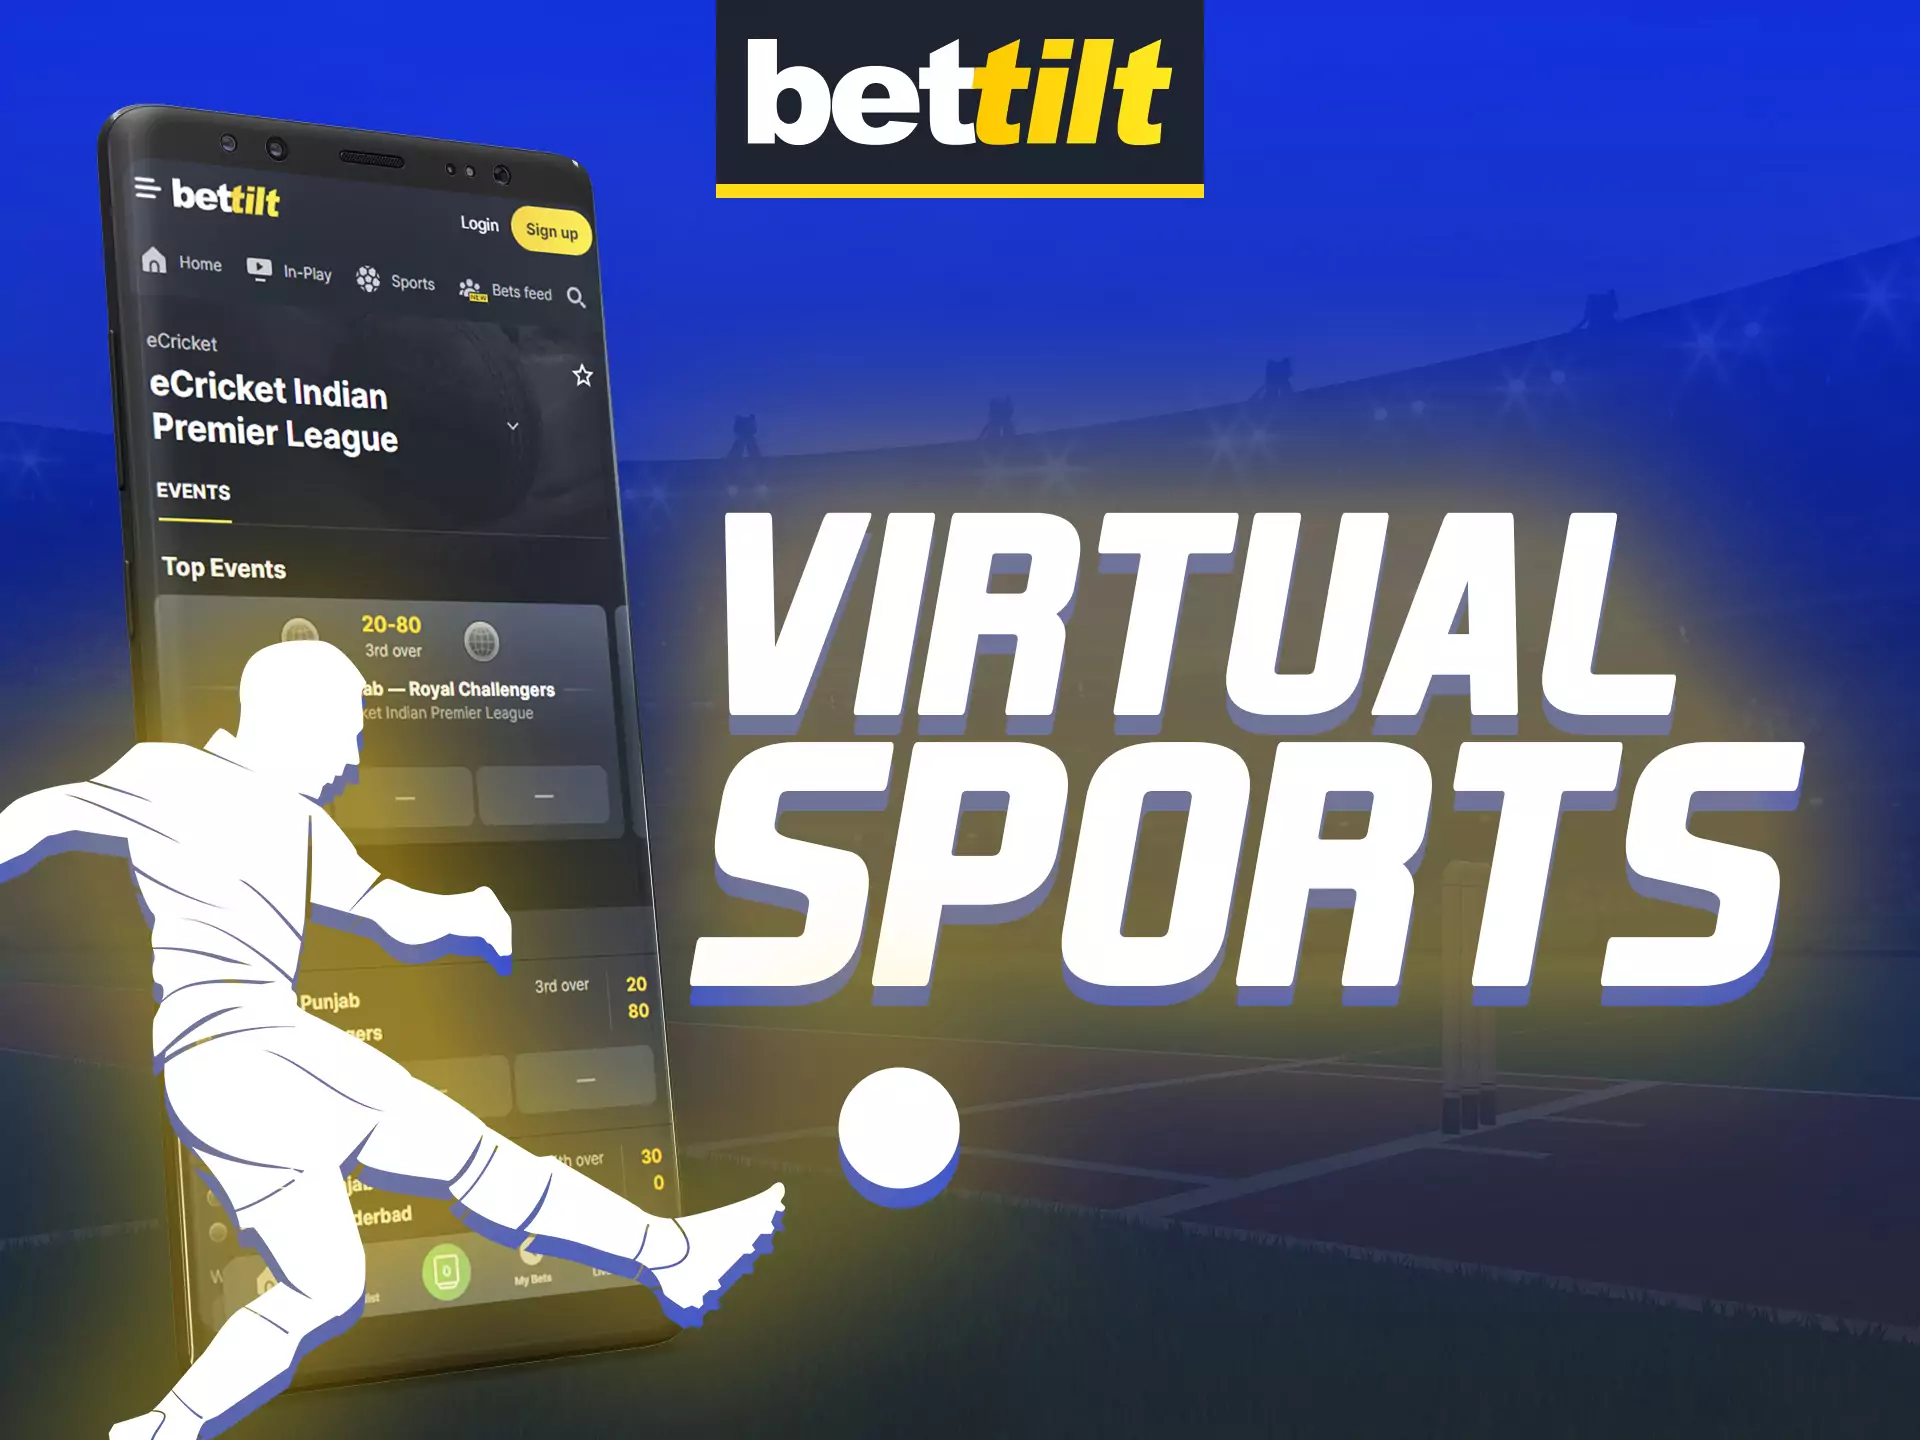 In the Bettilt app, bet on virtual sports.